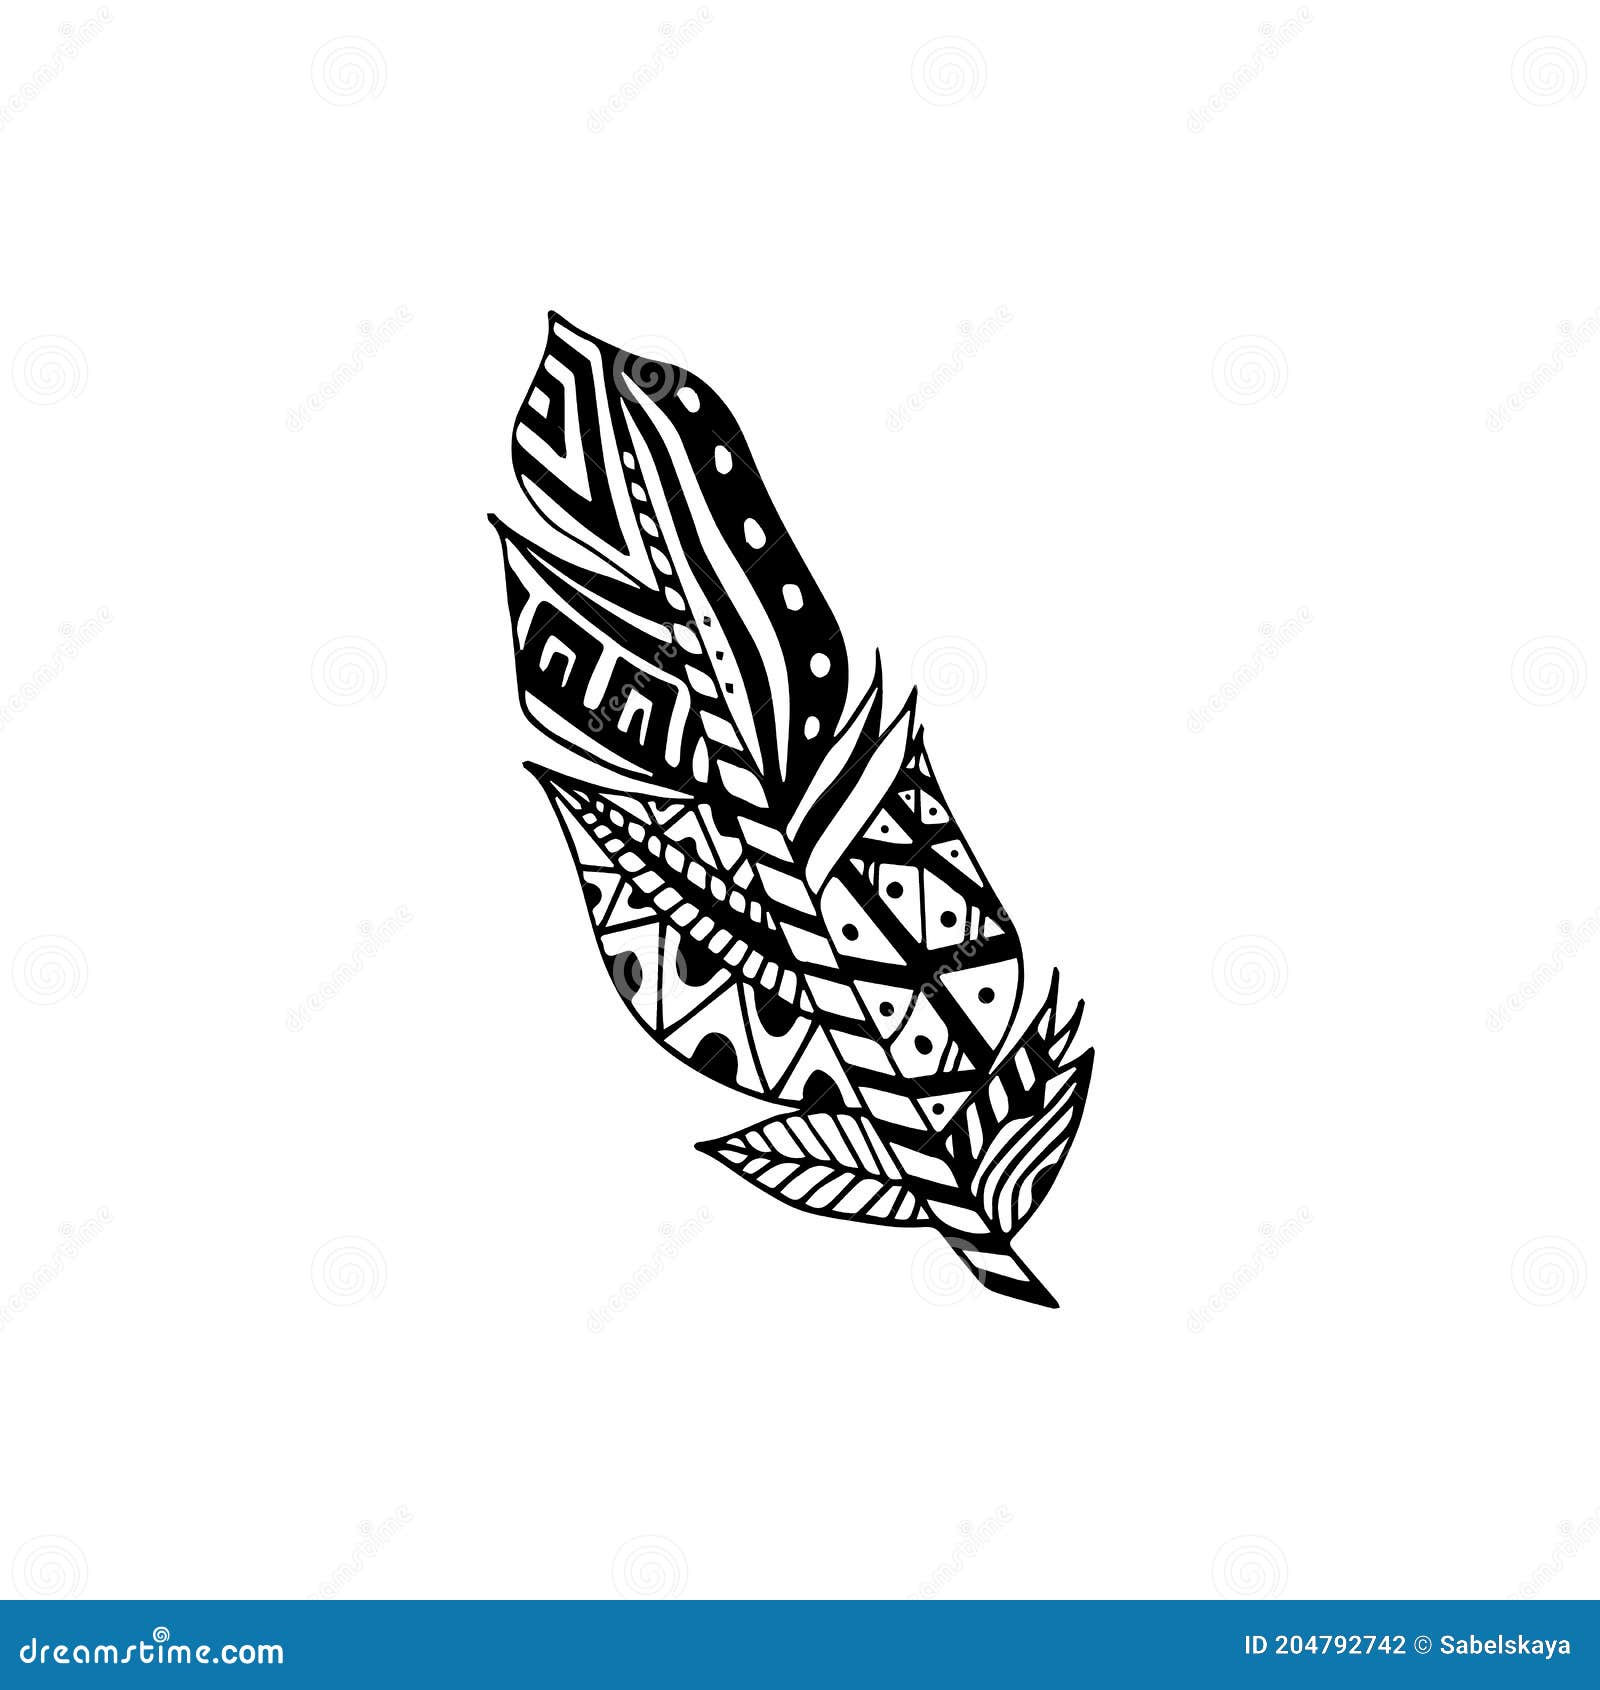 Geometric Indian Ornate Bird Feather Monochrome Vector Illustration ...